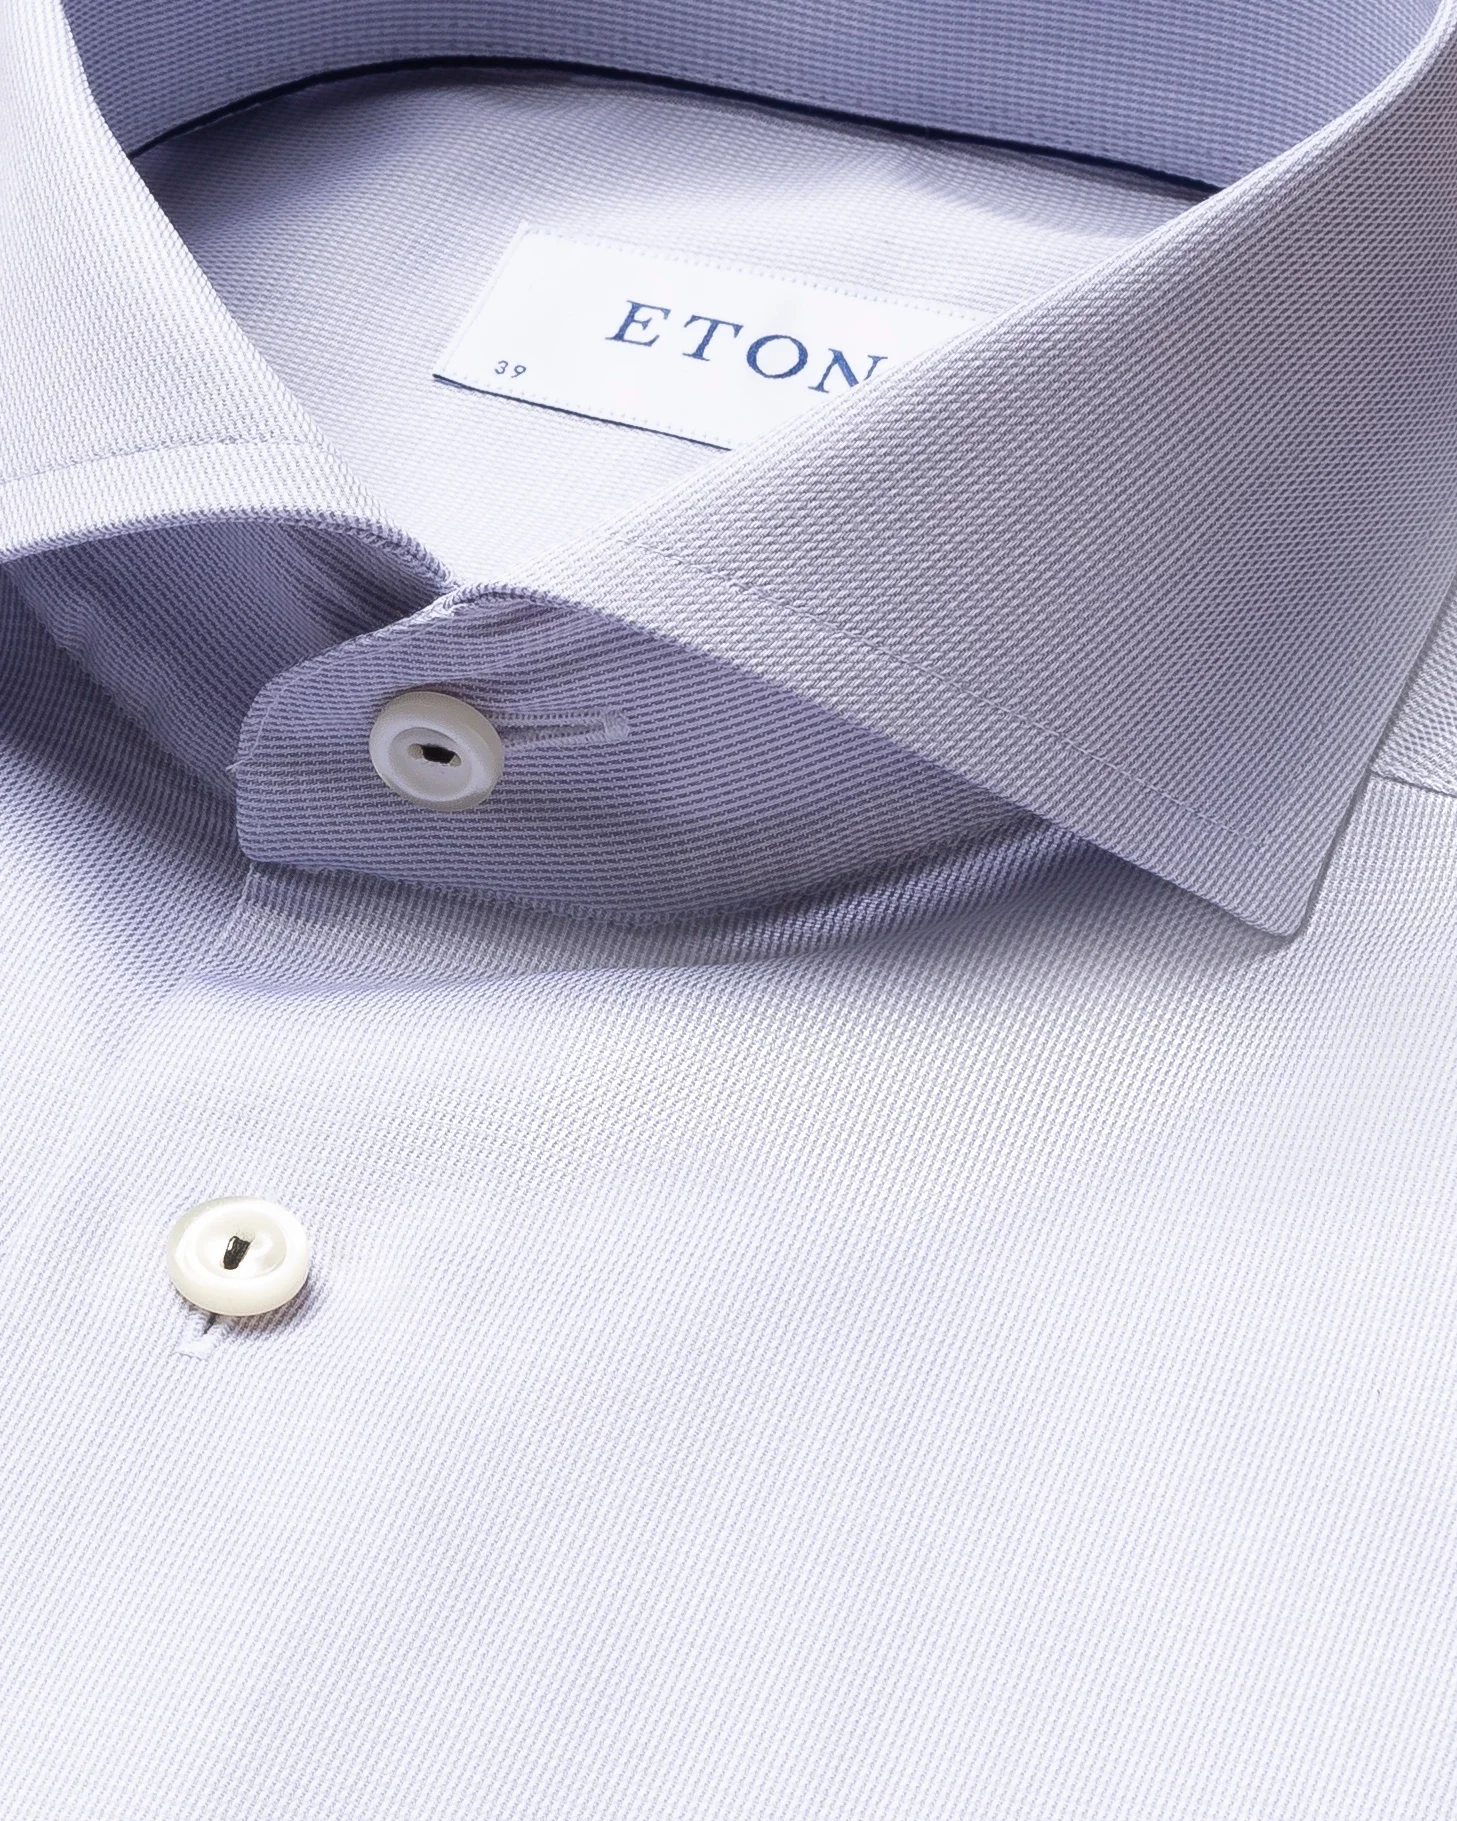 Eton - light grey royal twill shirt extreme cut away